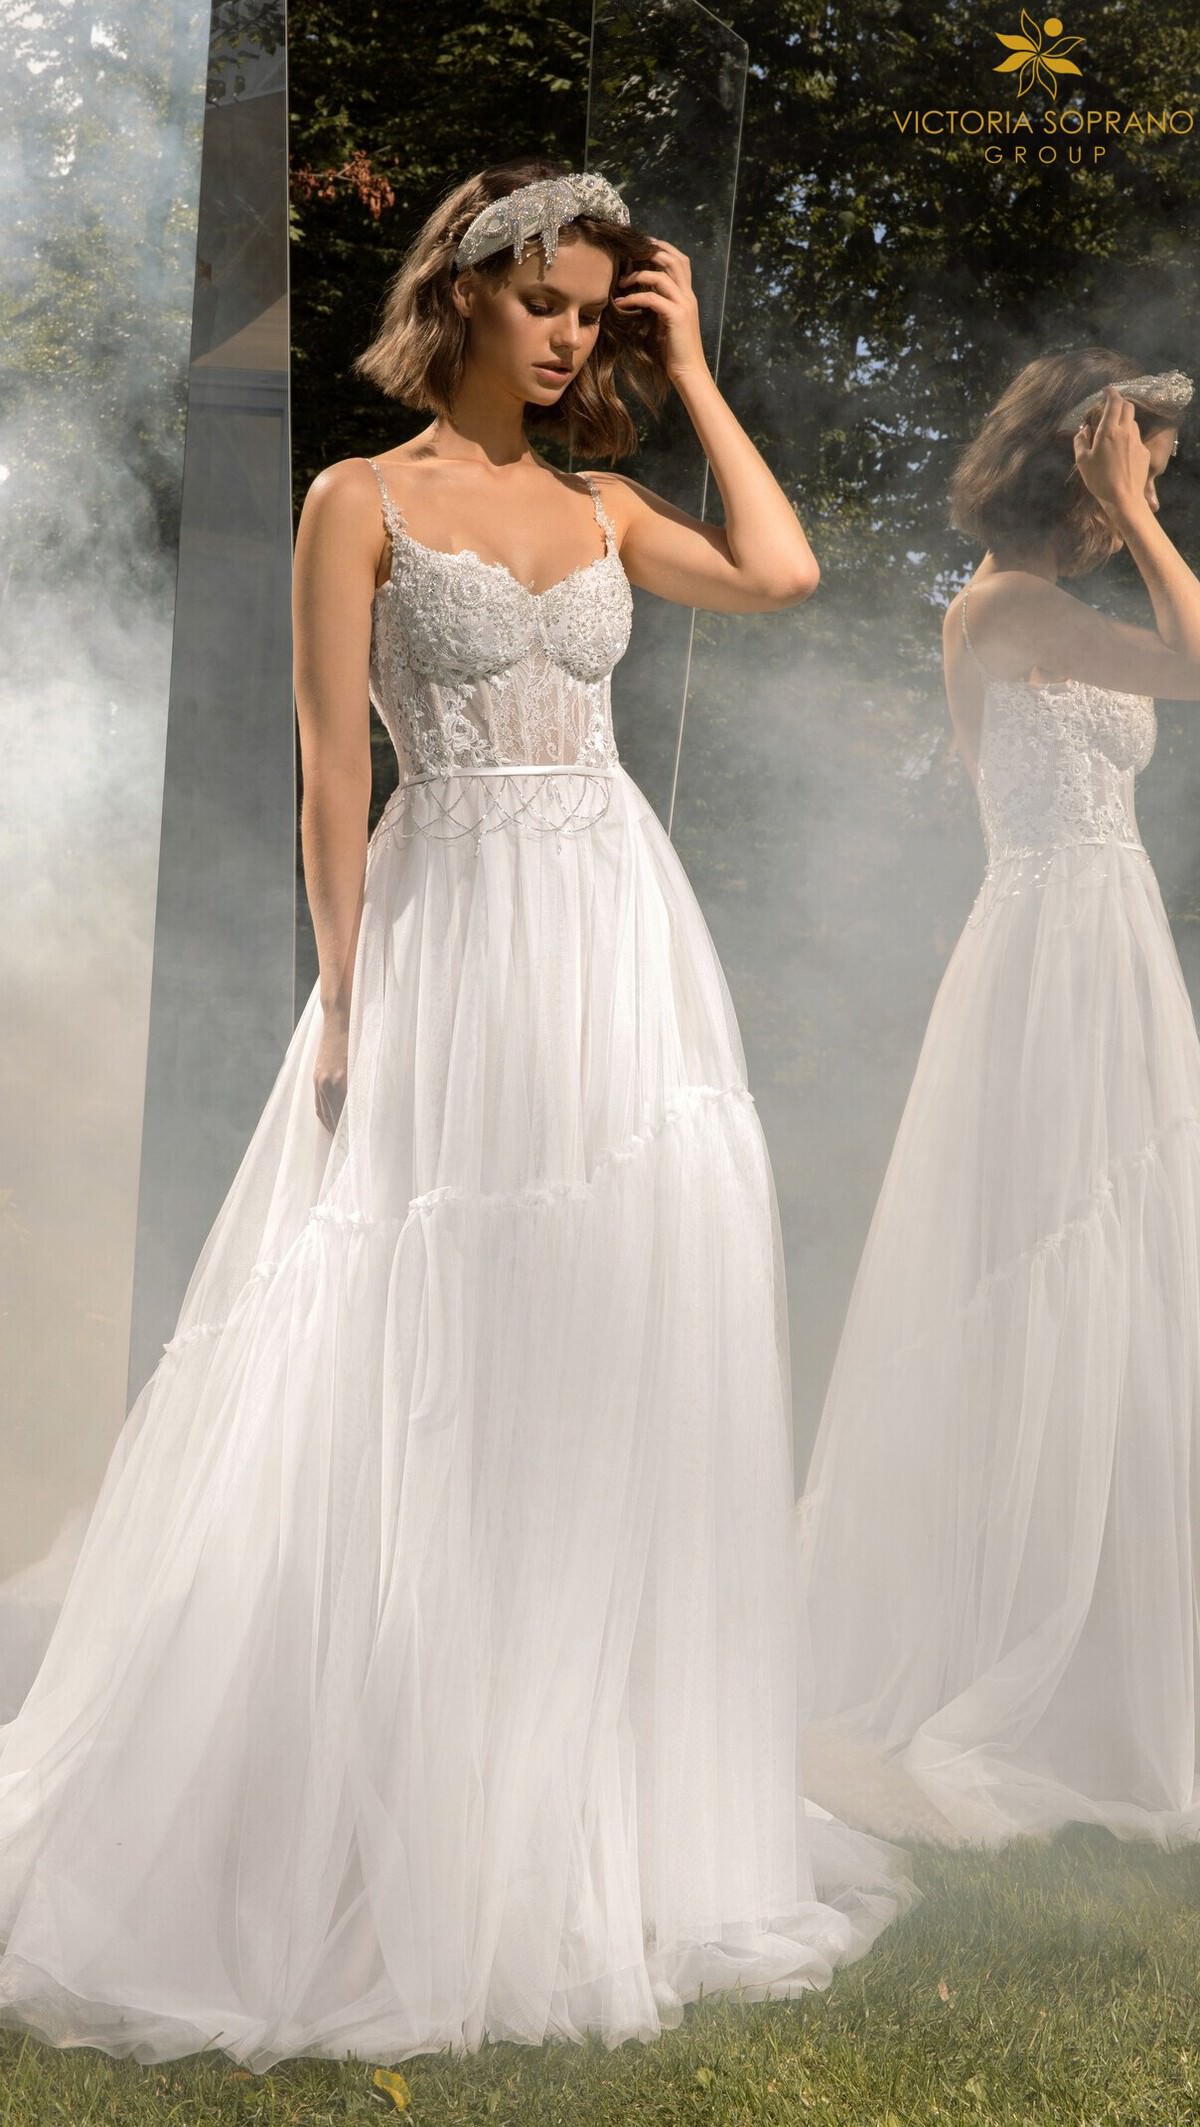 Vinatge Wedding dress by Victoria Soprano 2022 Bridal Collection